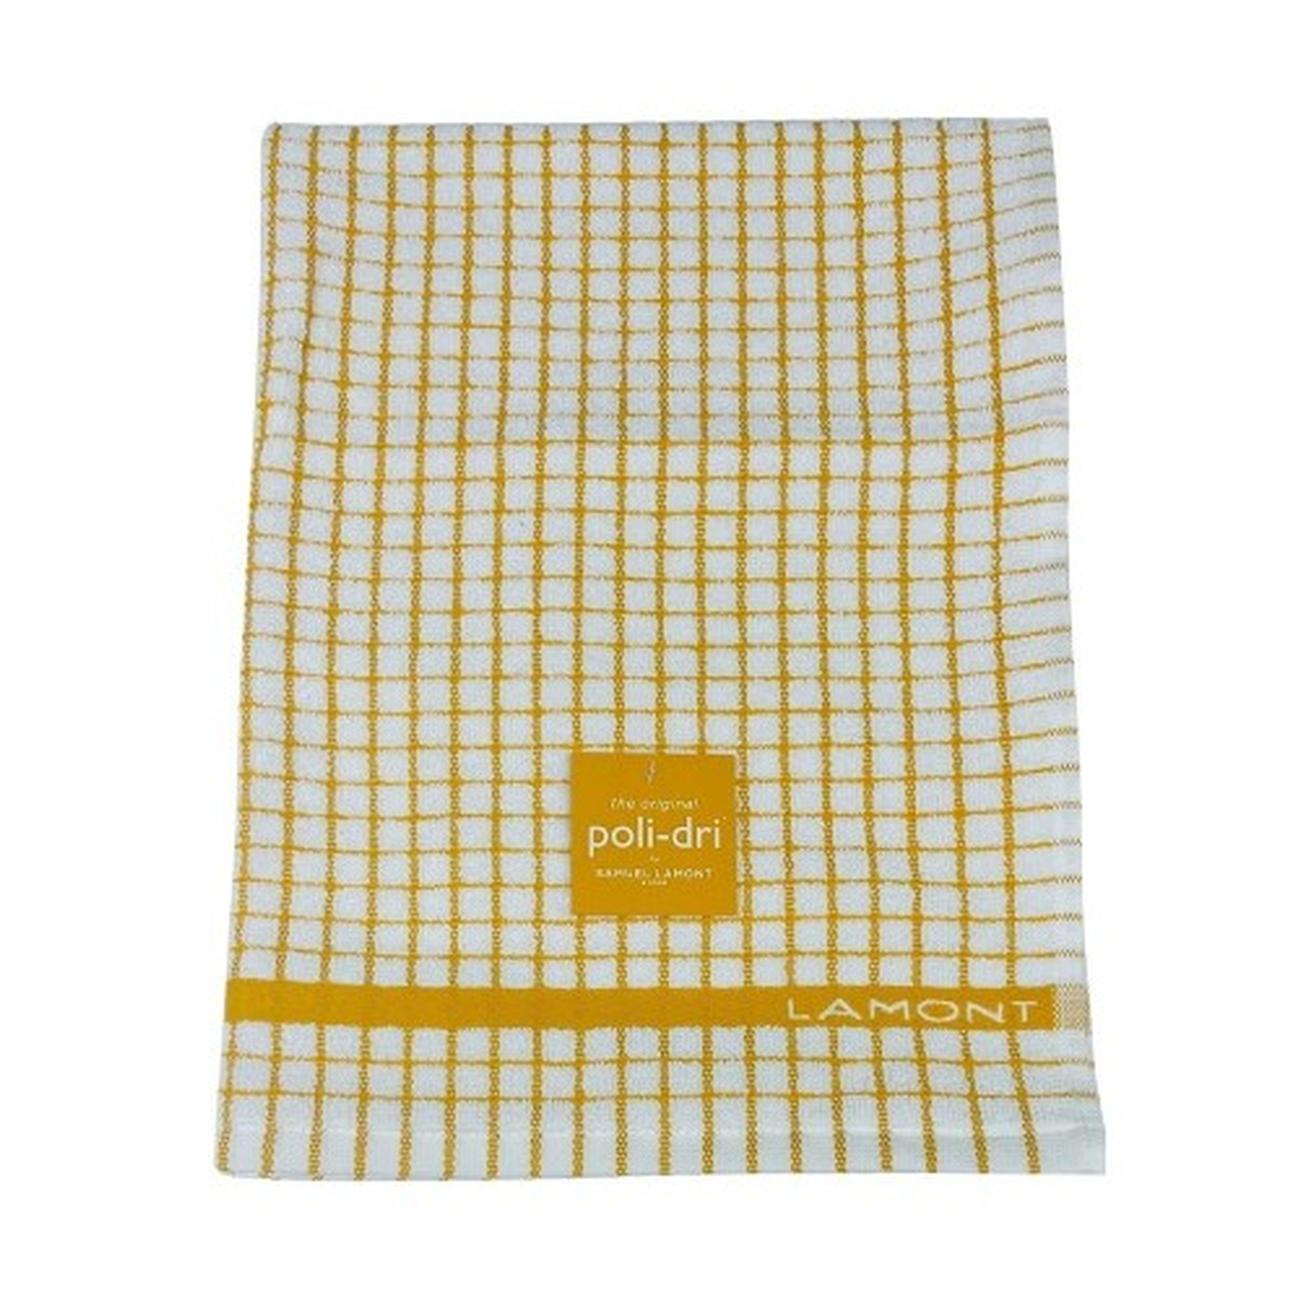 samuel-lamont-polidri-tea-towel-honey - Samuel Lamont Poli Dri Tea Towel Honey